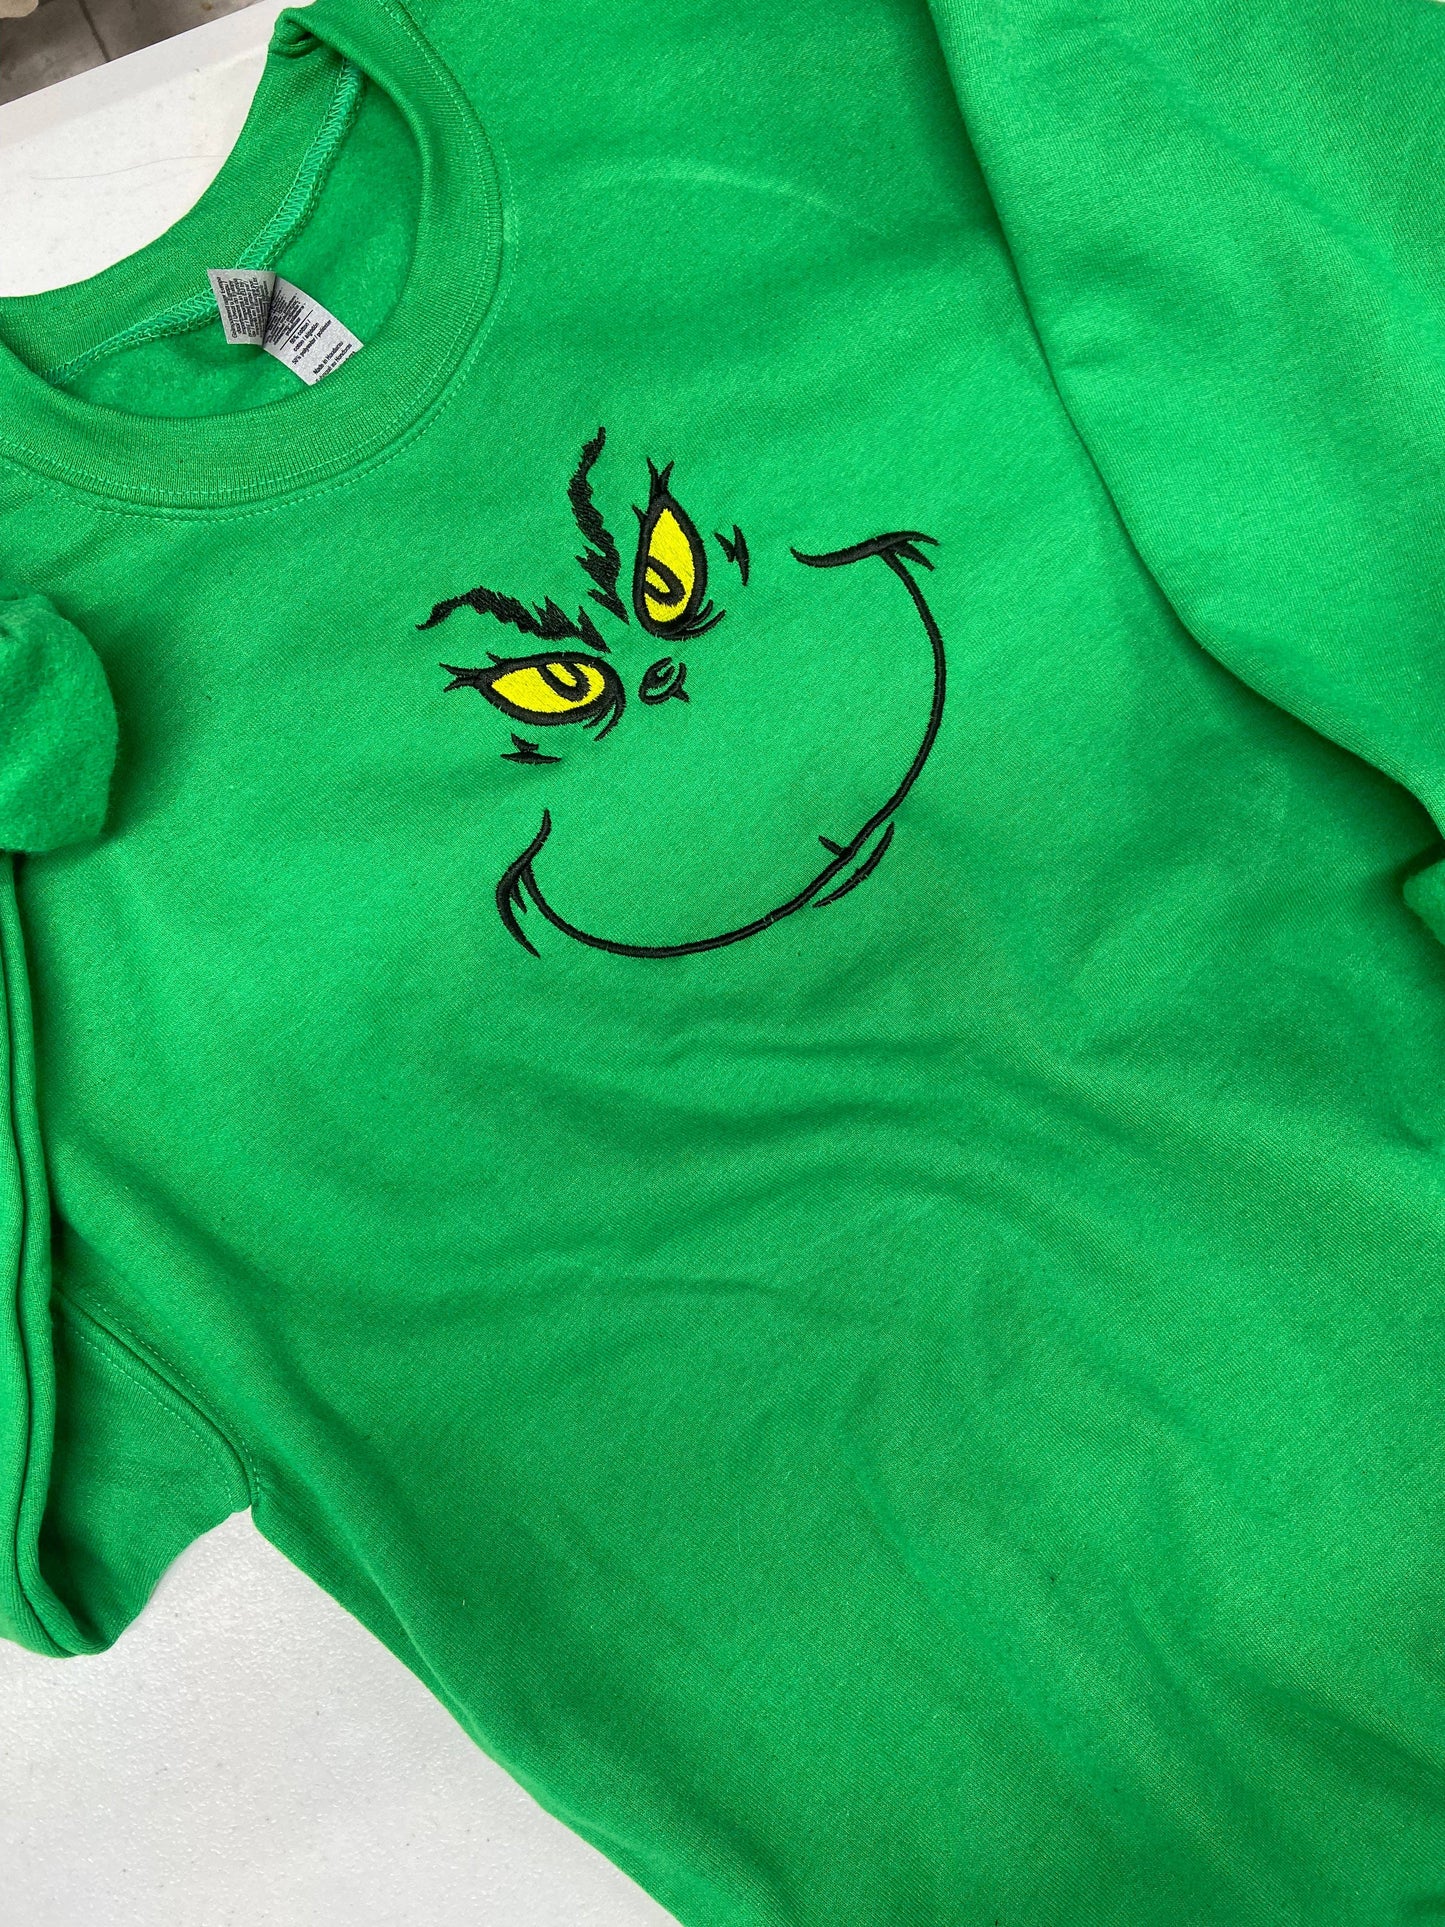 Gunpowder and lace wholesale - Mr. Green man embroidered sweatshirt